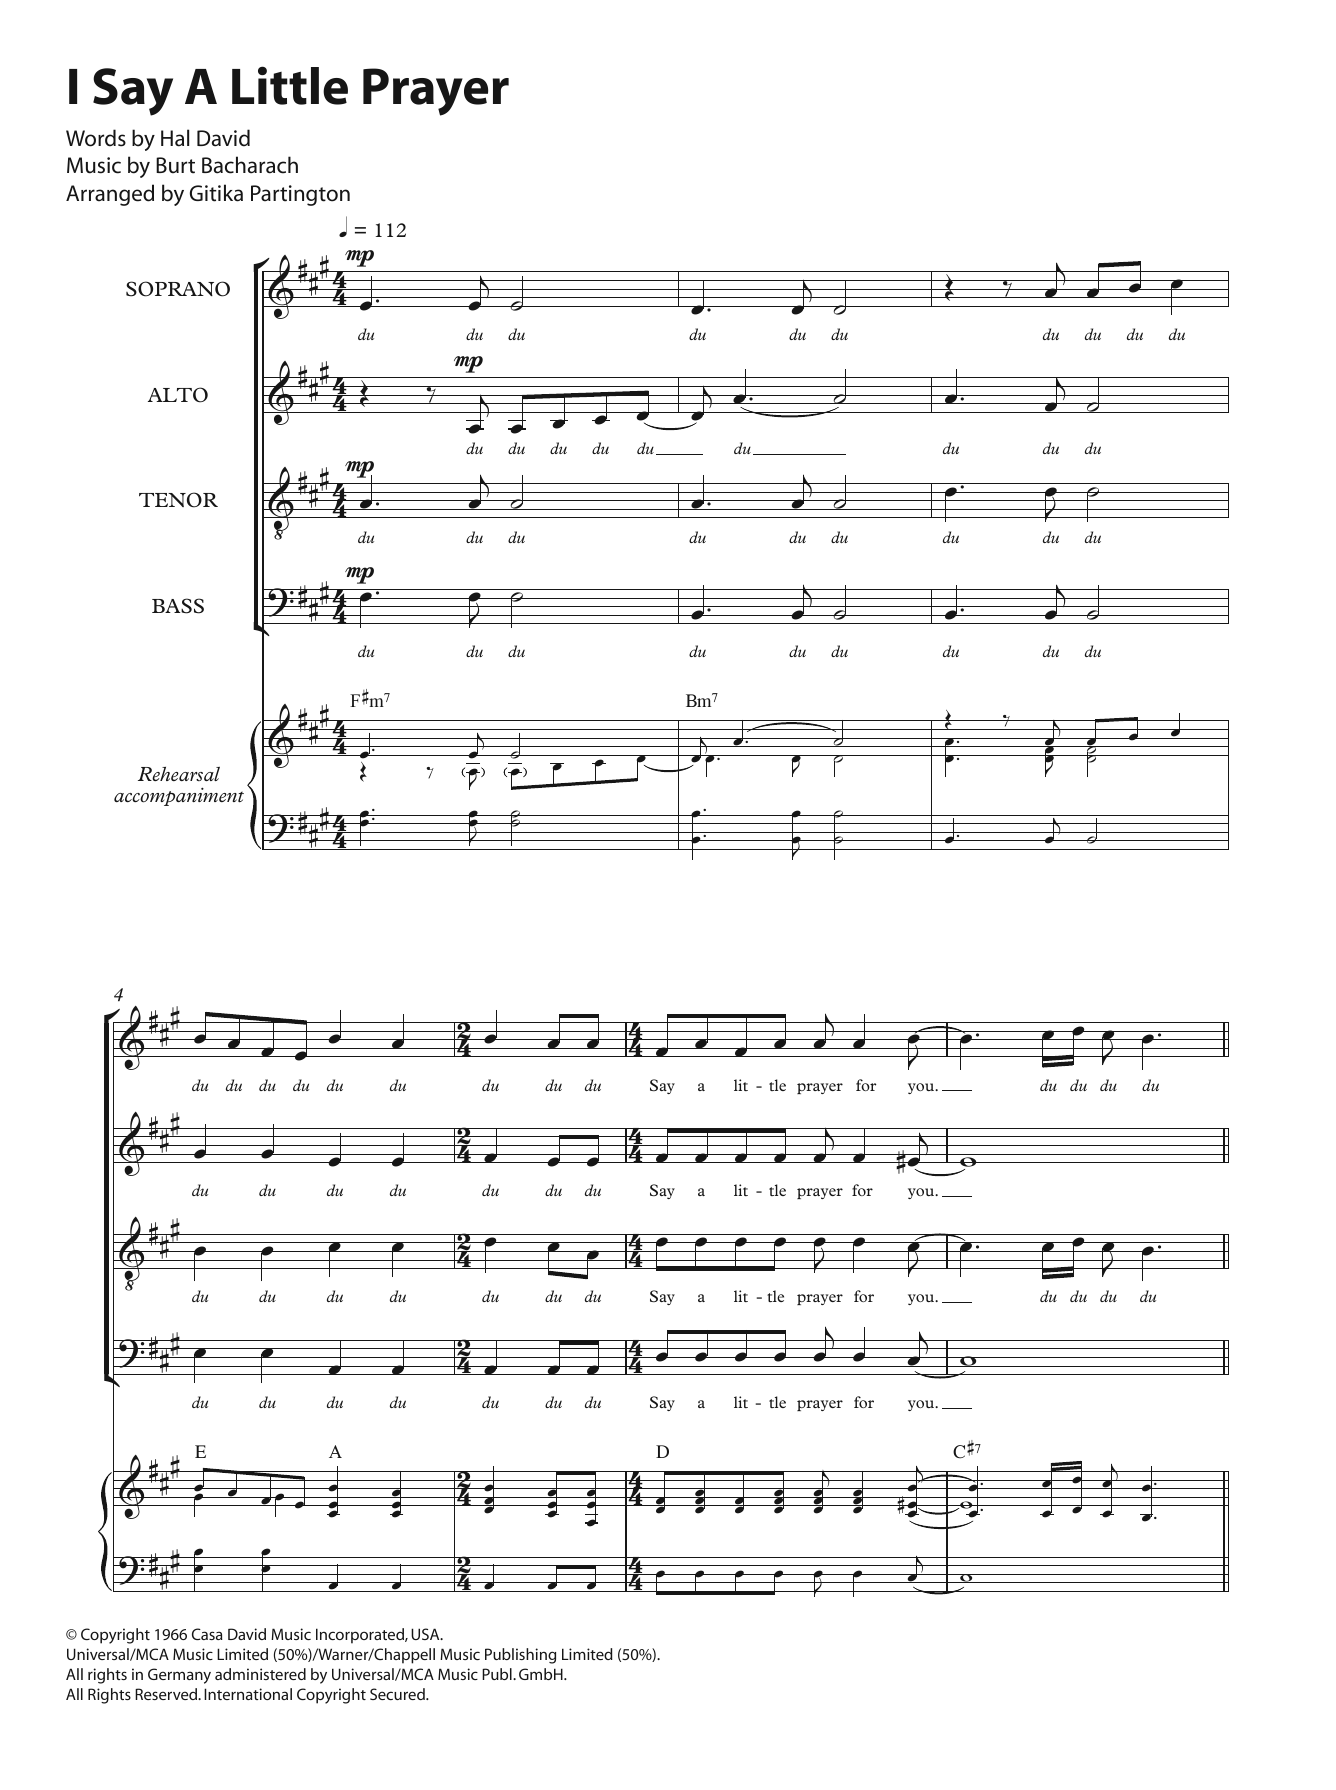 Aretha Franklin I Say A Little Prayer (arr. Gitika Partington) Sheet Music Notes & Chords for SATB - Download or Print PDF